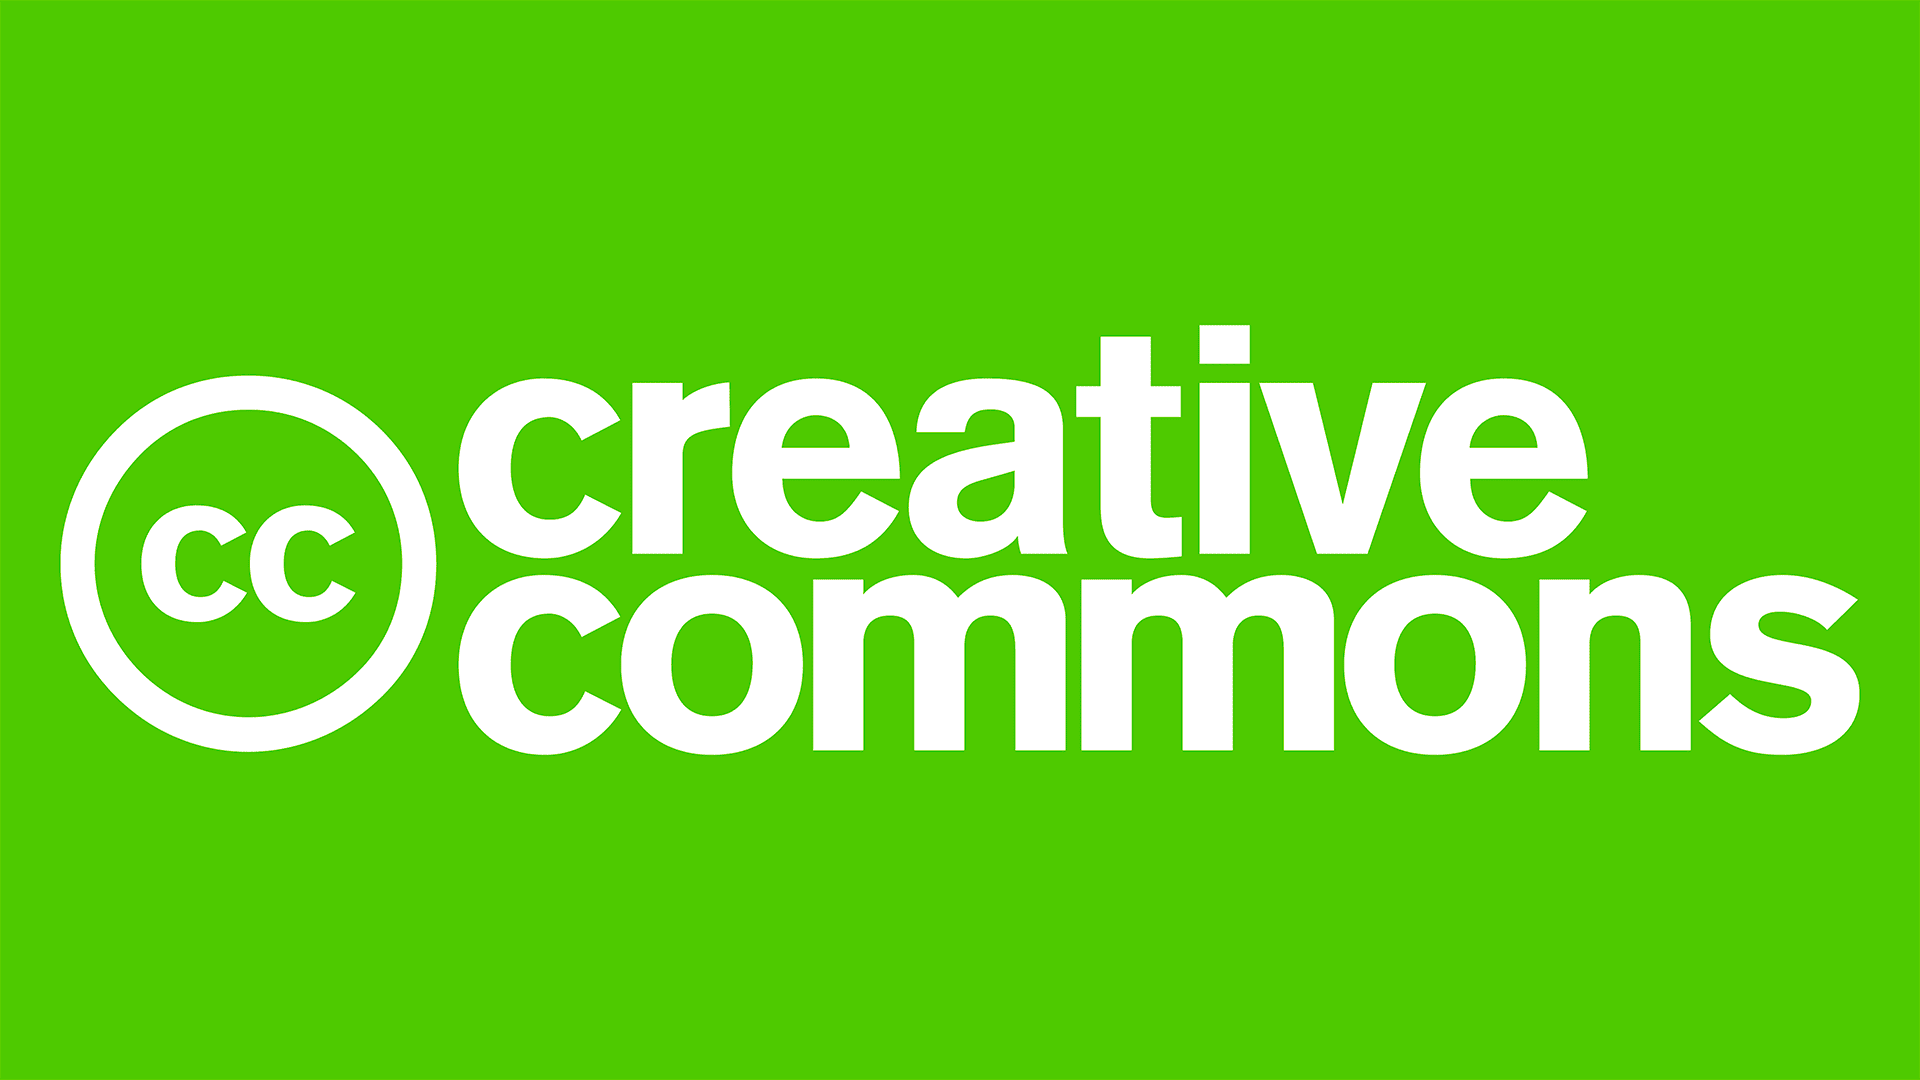 Public commons. Creative Commons.